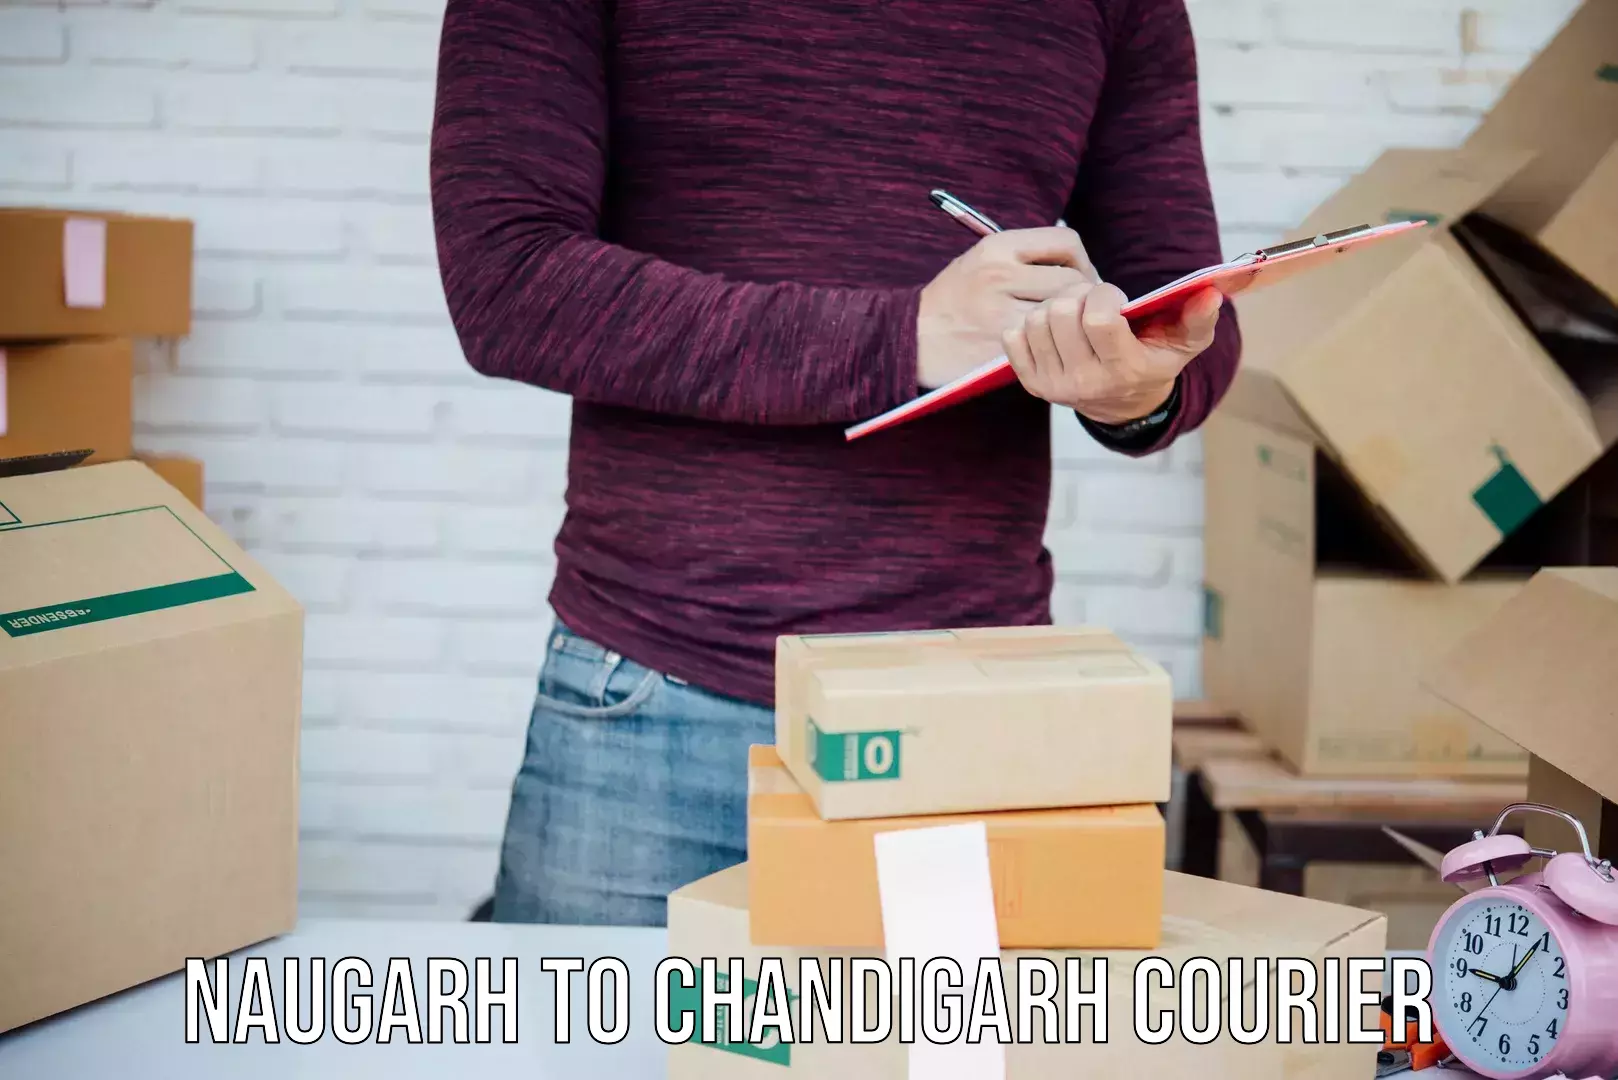 Courier service comparison Naugarh to Chandigarh